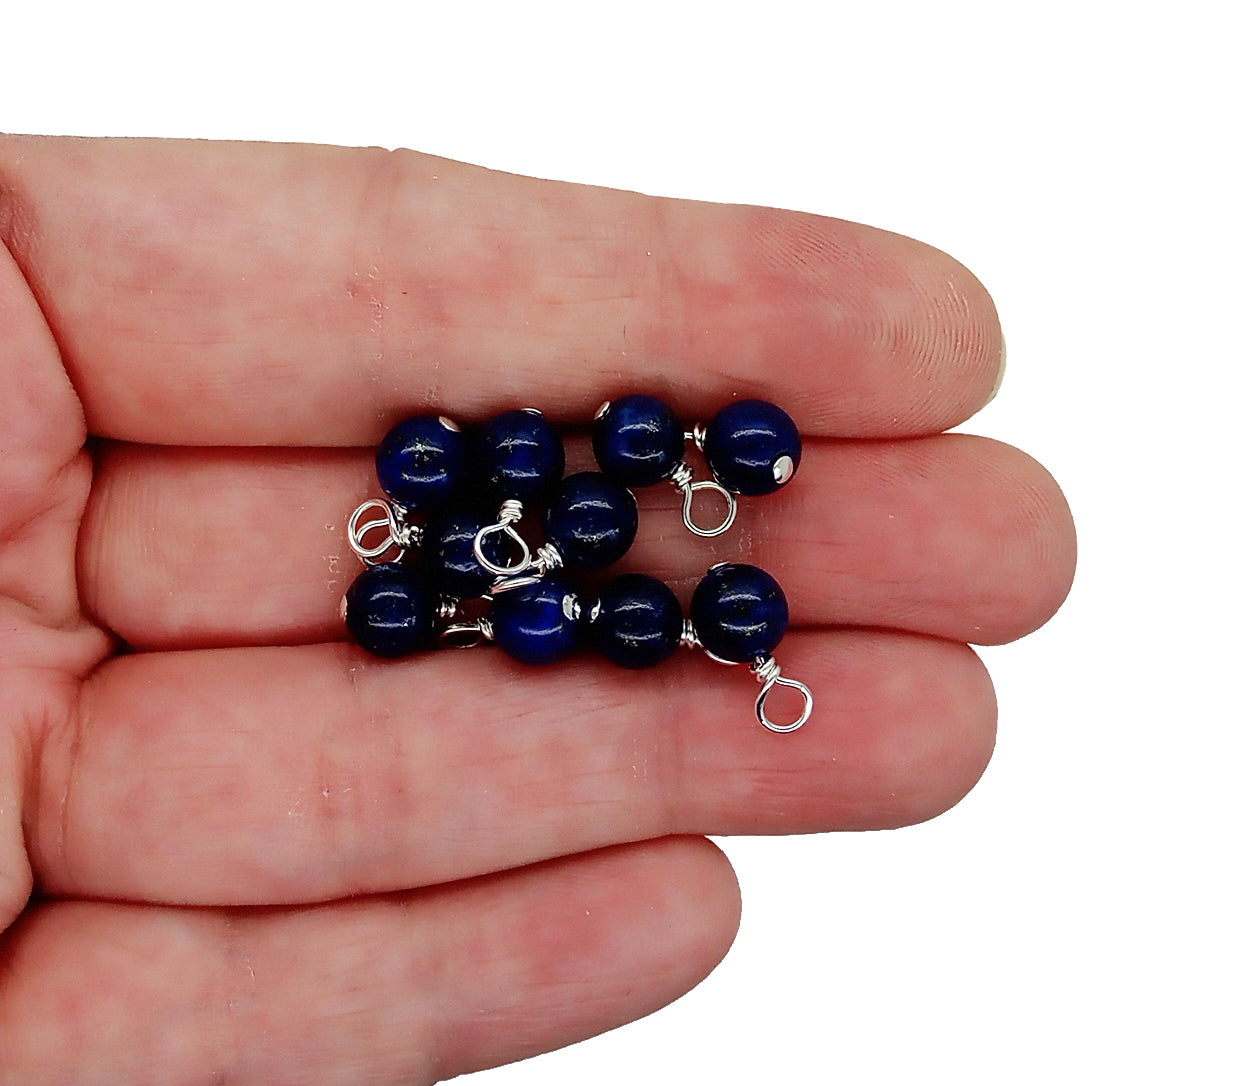 Lapis Lazuli Bead Charms, Blue 5mm - 6mm Gemstone Dangles